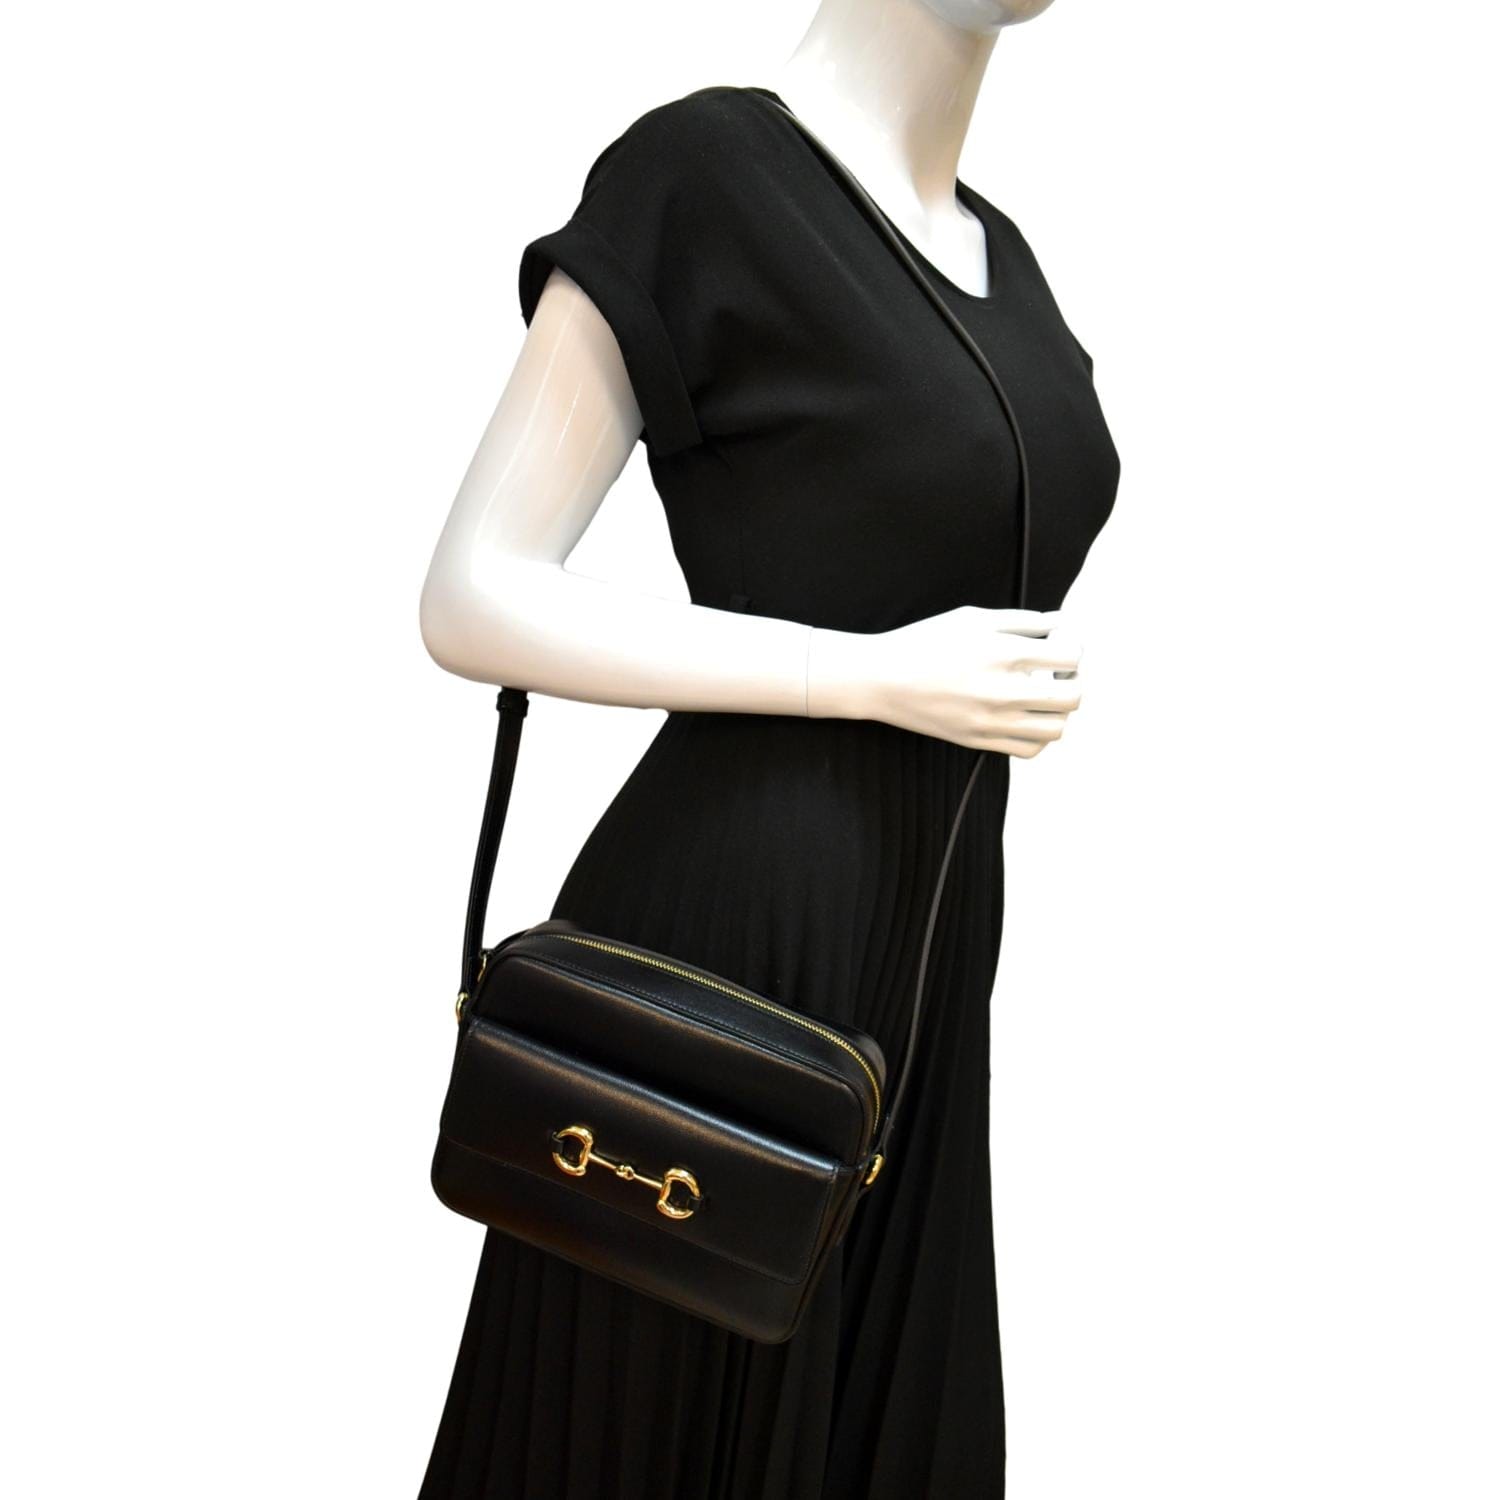 Gucci Horsebit 1955 small shoulder bag in black leather